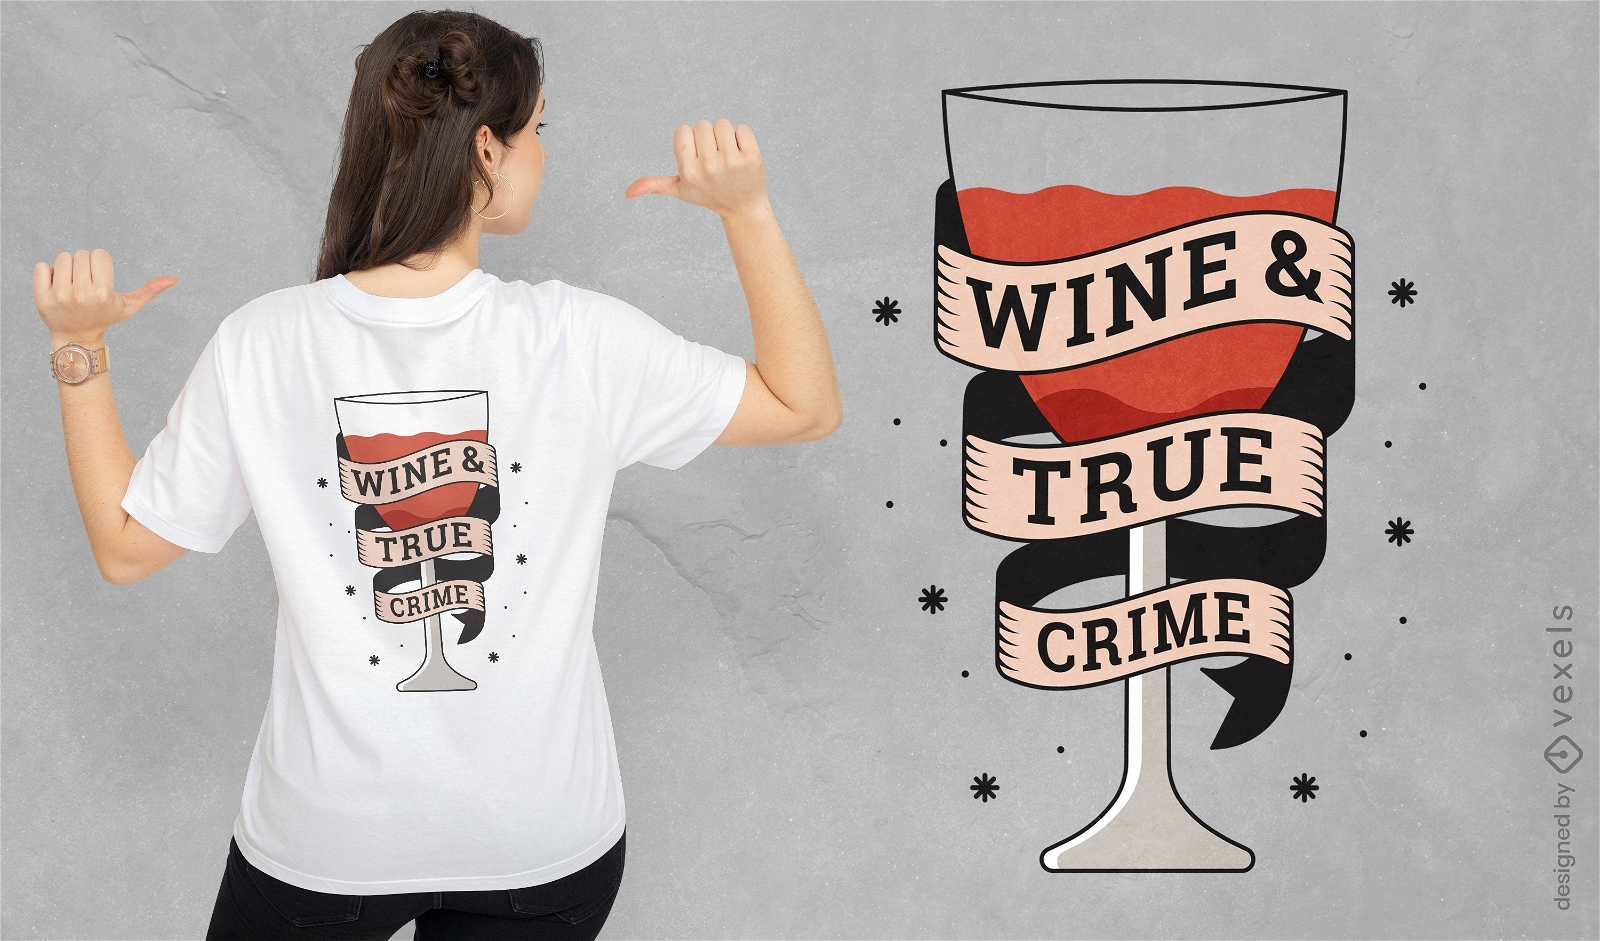 Dise?o de camiseta de vino y crimen verdadero.